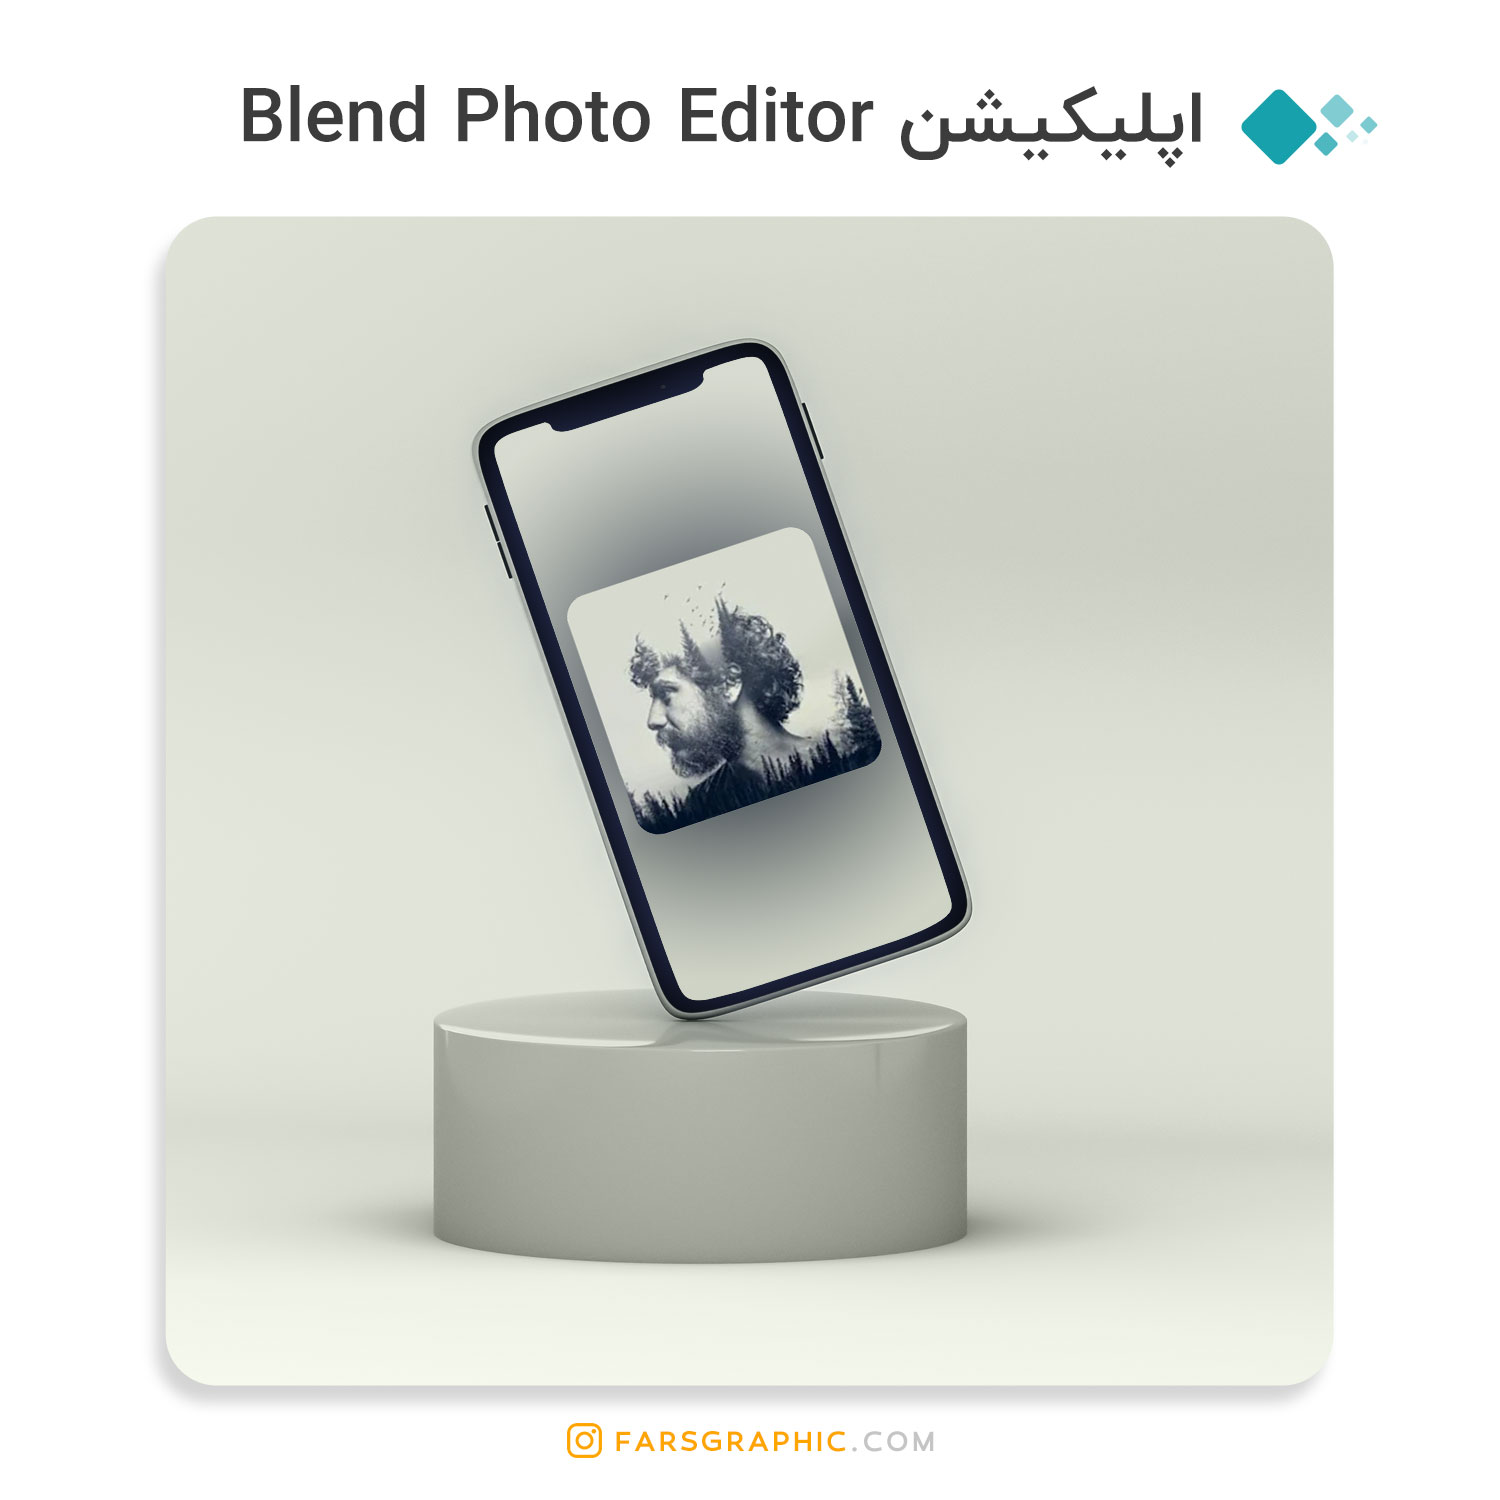 اپلیکیشن Blend Photo Editor